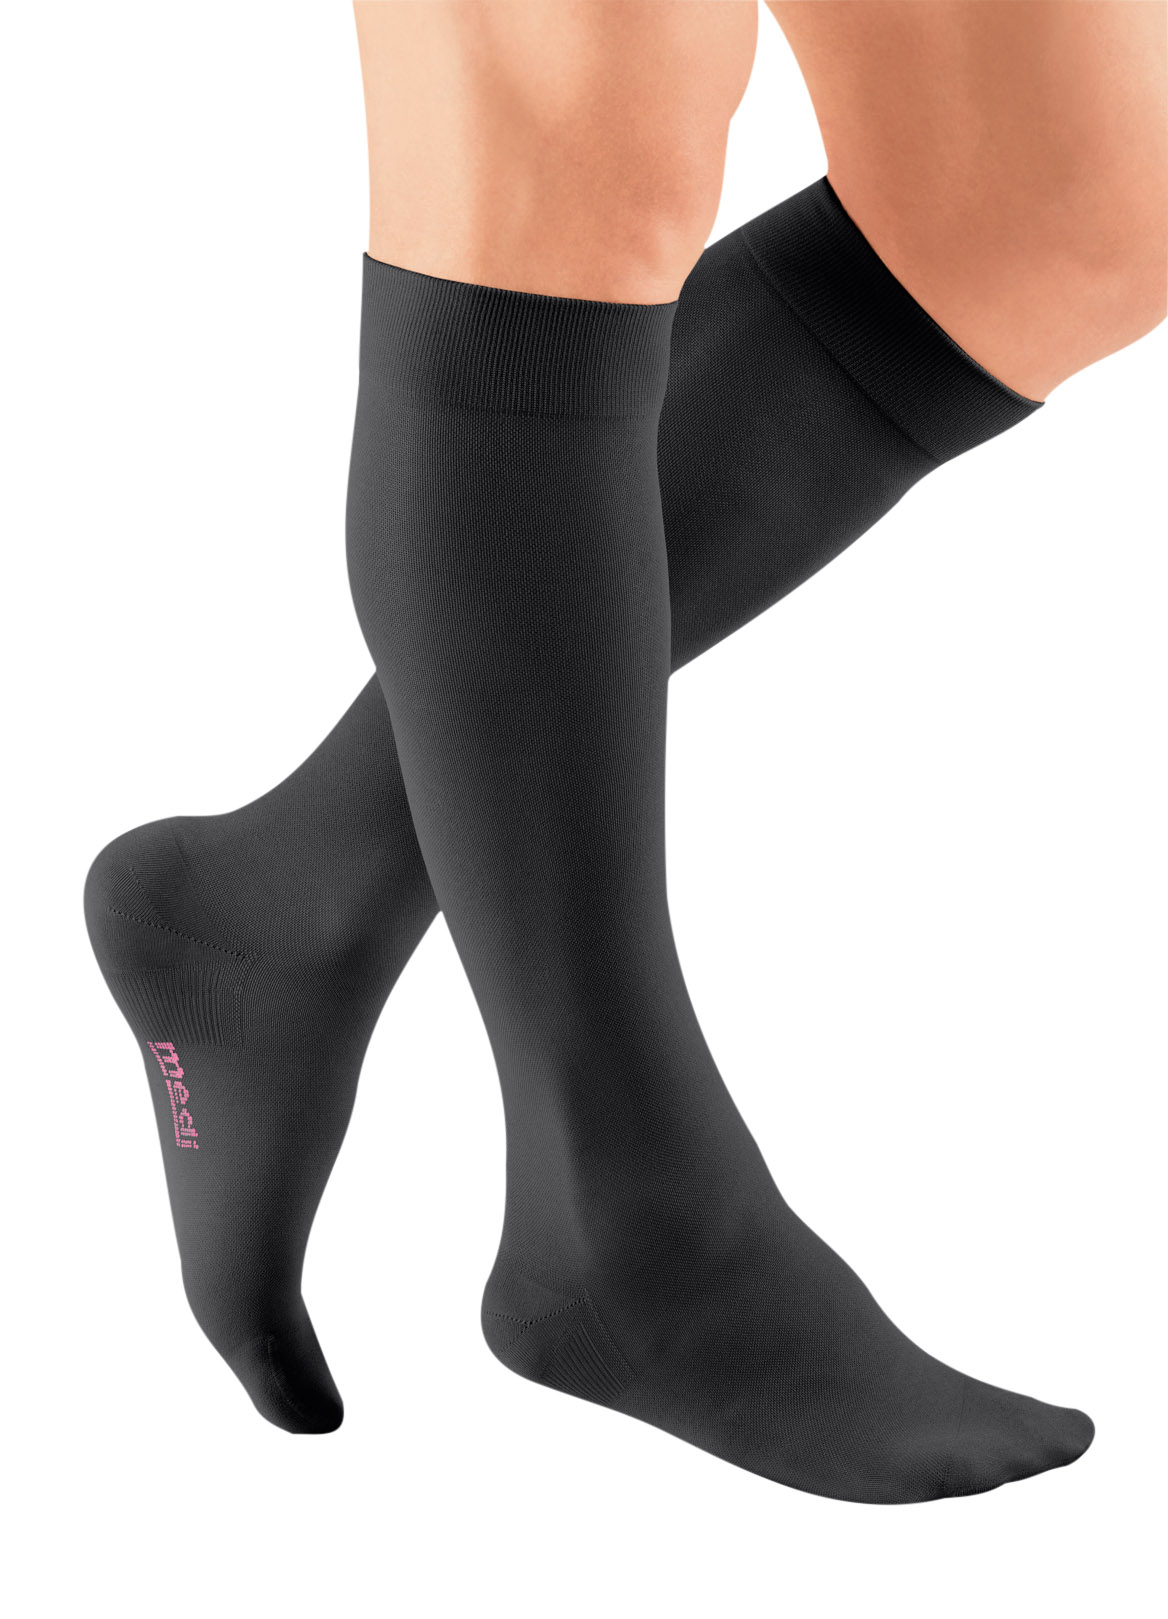 mediven plus below knee compression stockings – P&H Services